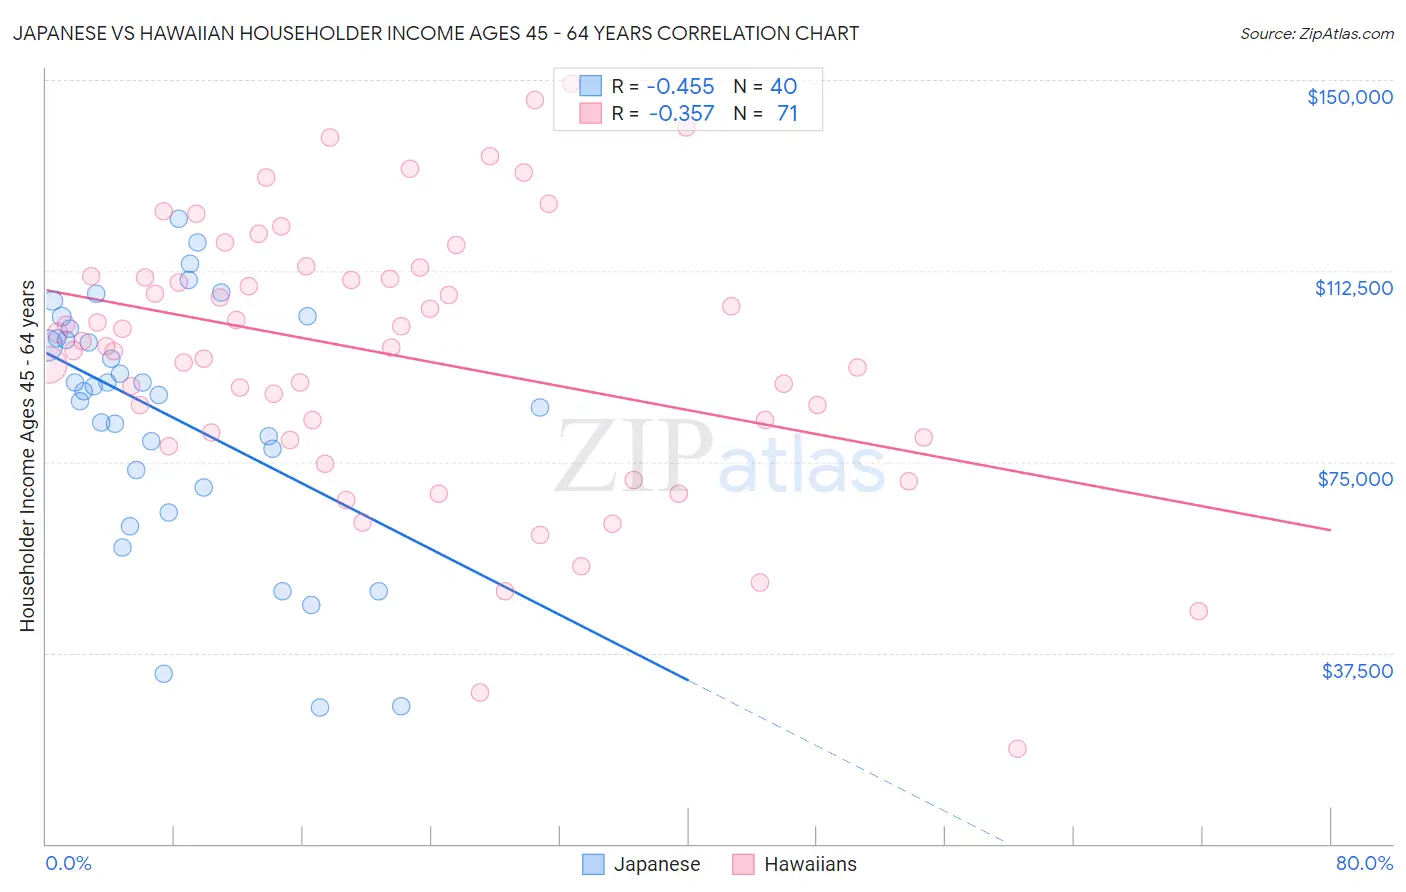 Japanese vs Hawaiian Householder Income Ages 45 - 64 years